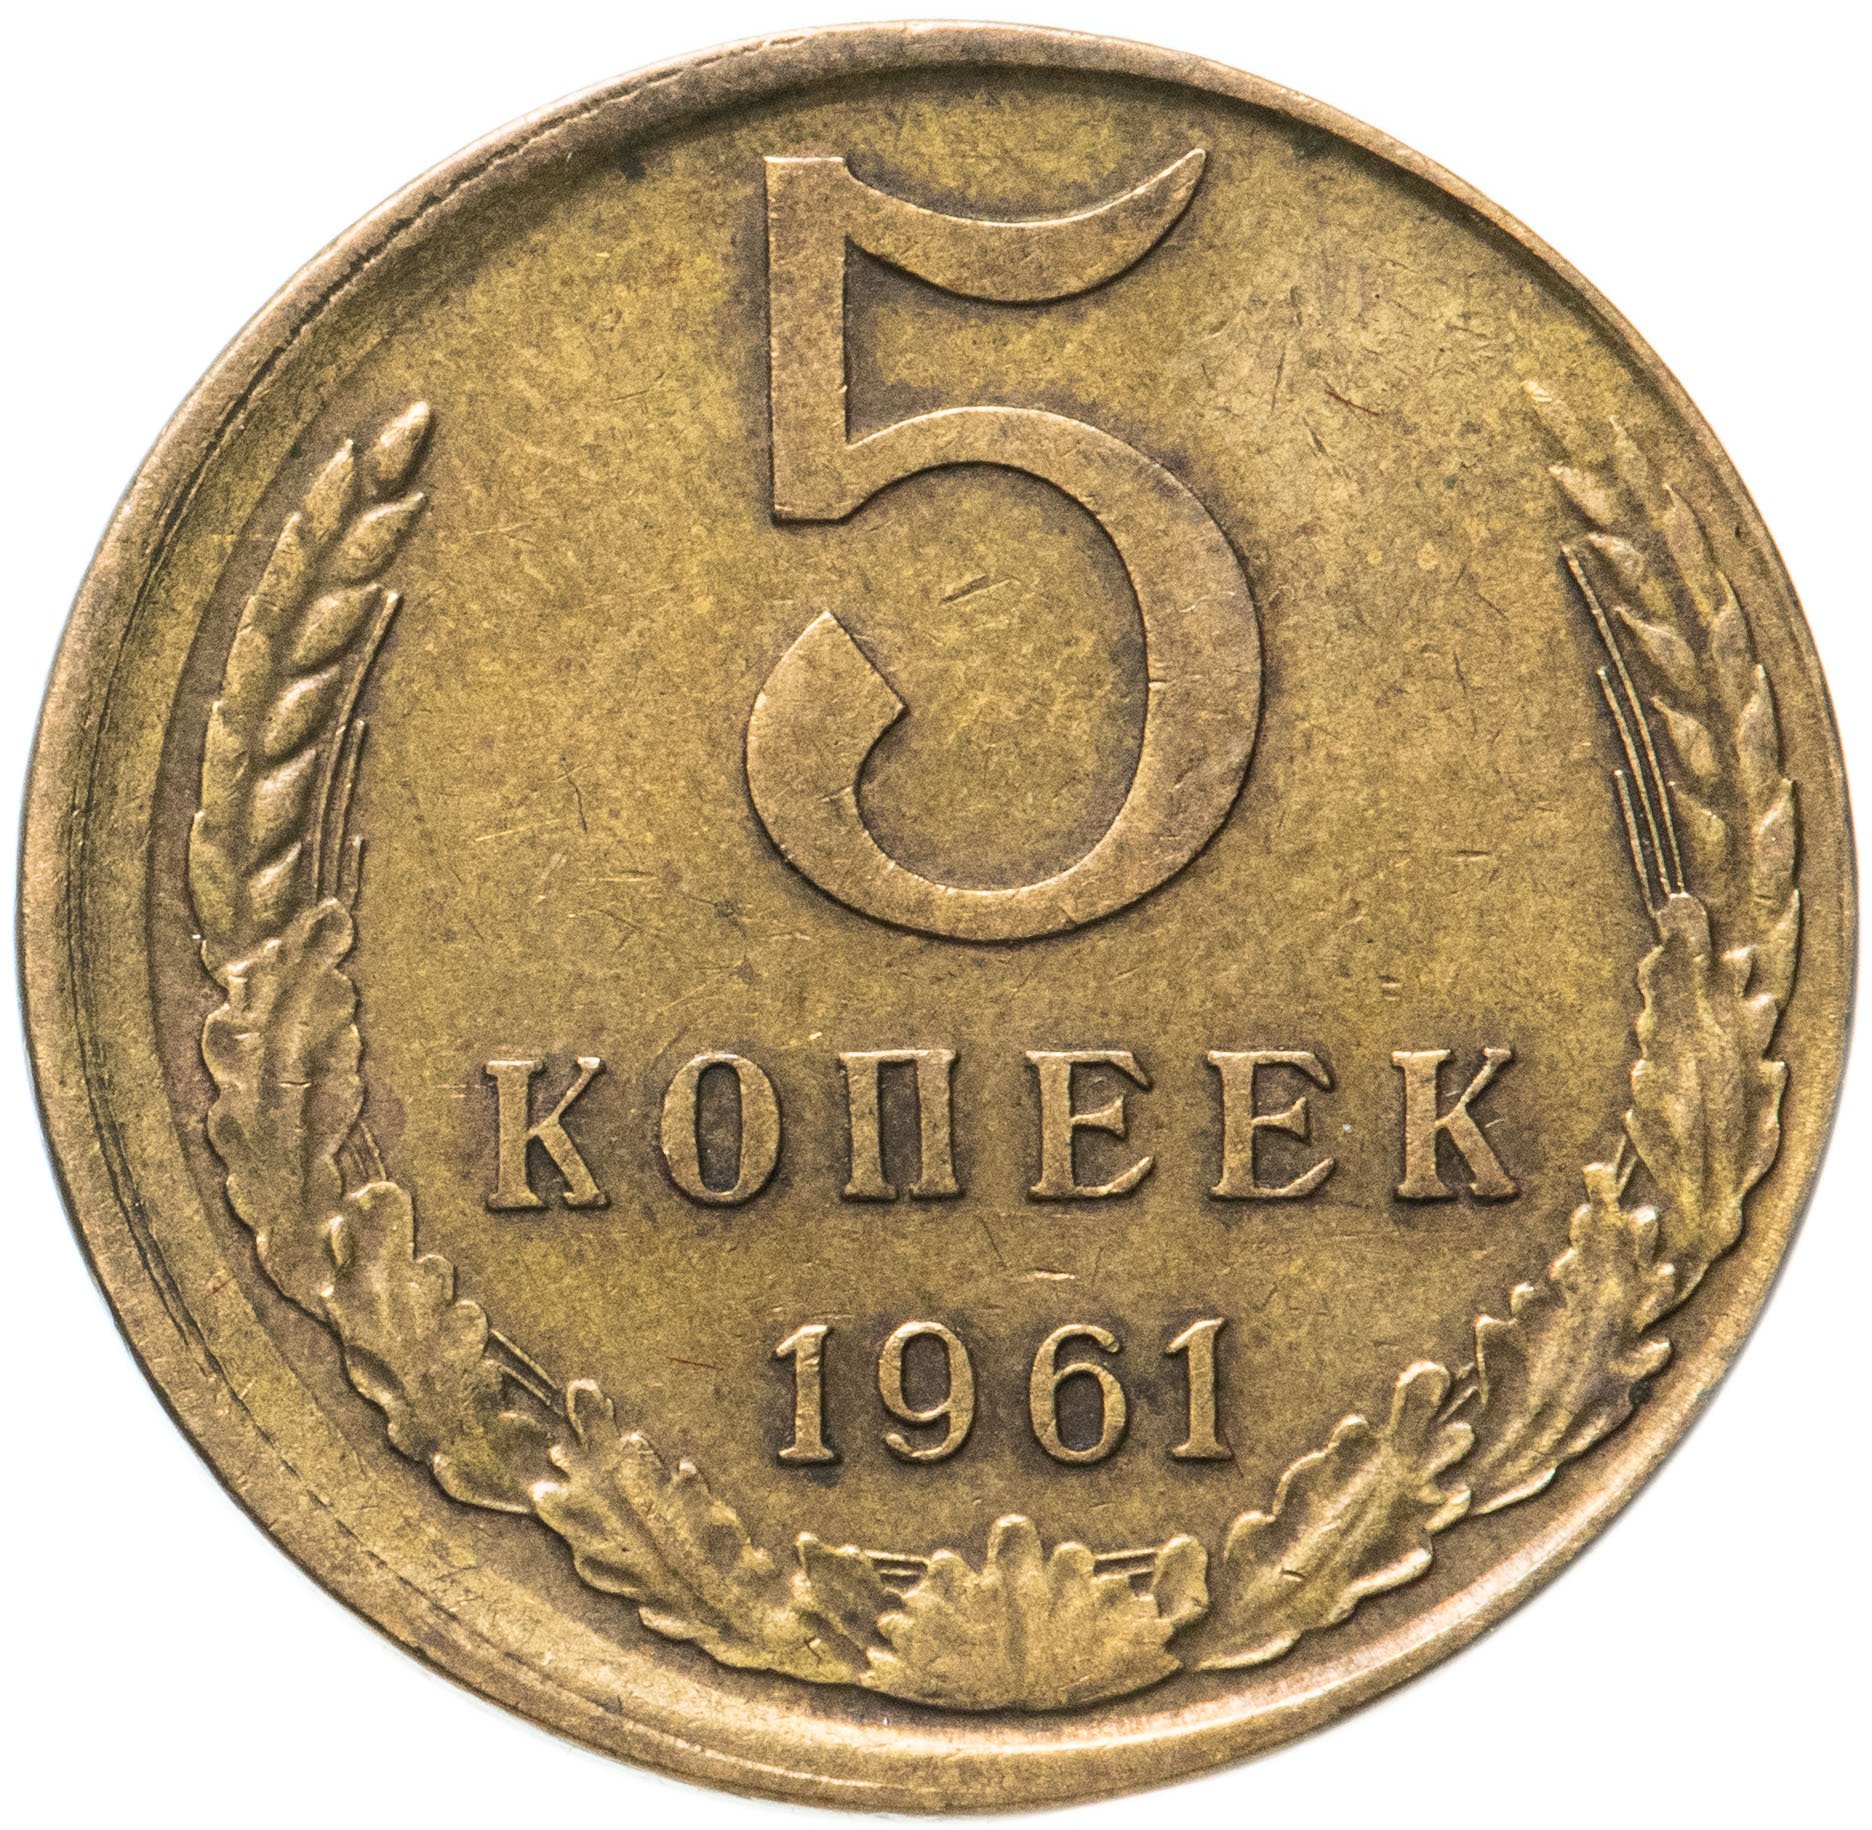 60 рублей 25 копеек. Советские монеты. Монета 2 копейки. Монеты СССР до 1961 года. Копейка монета.